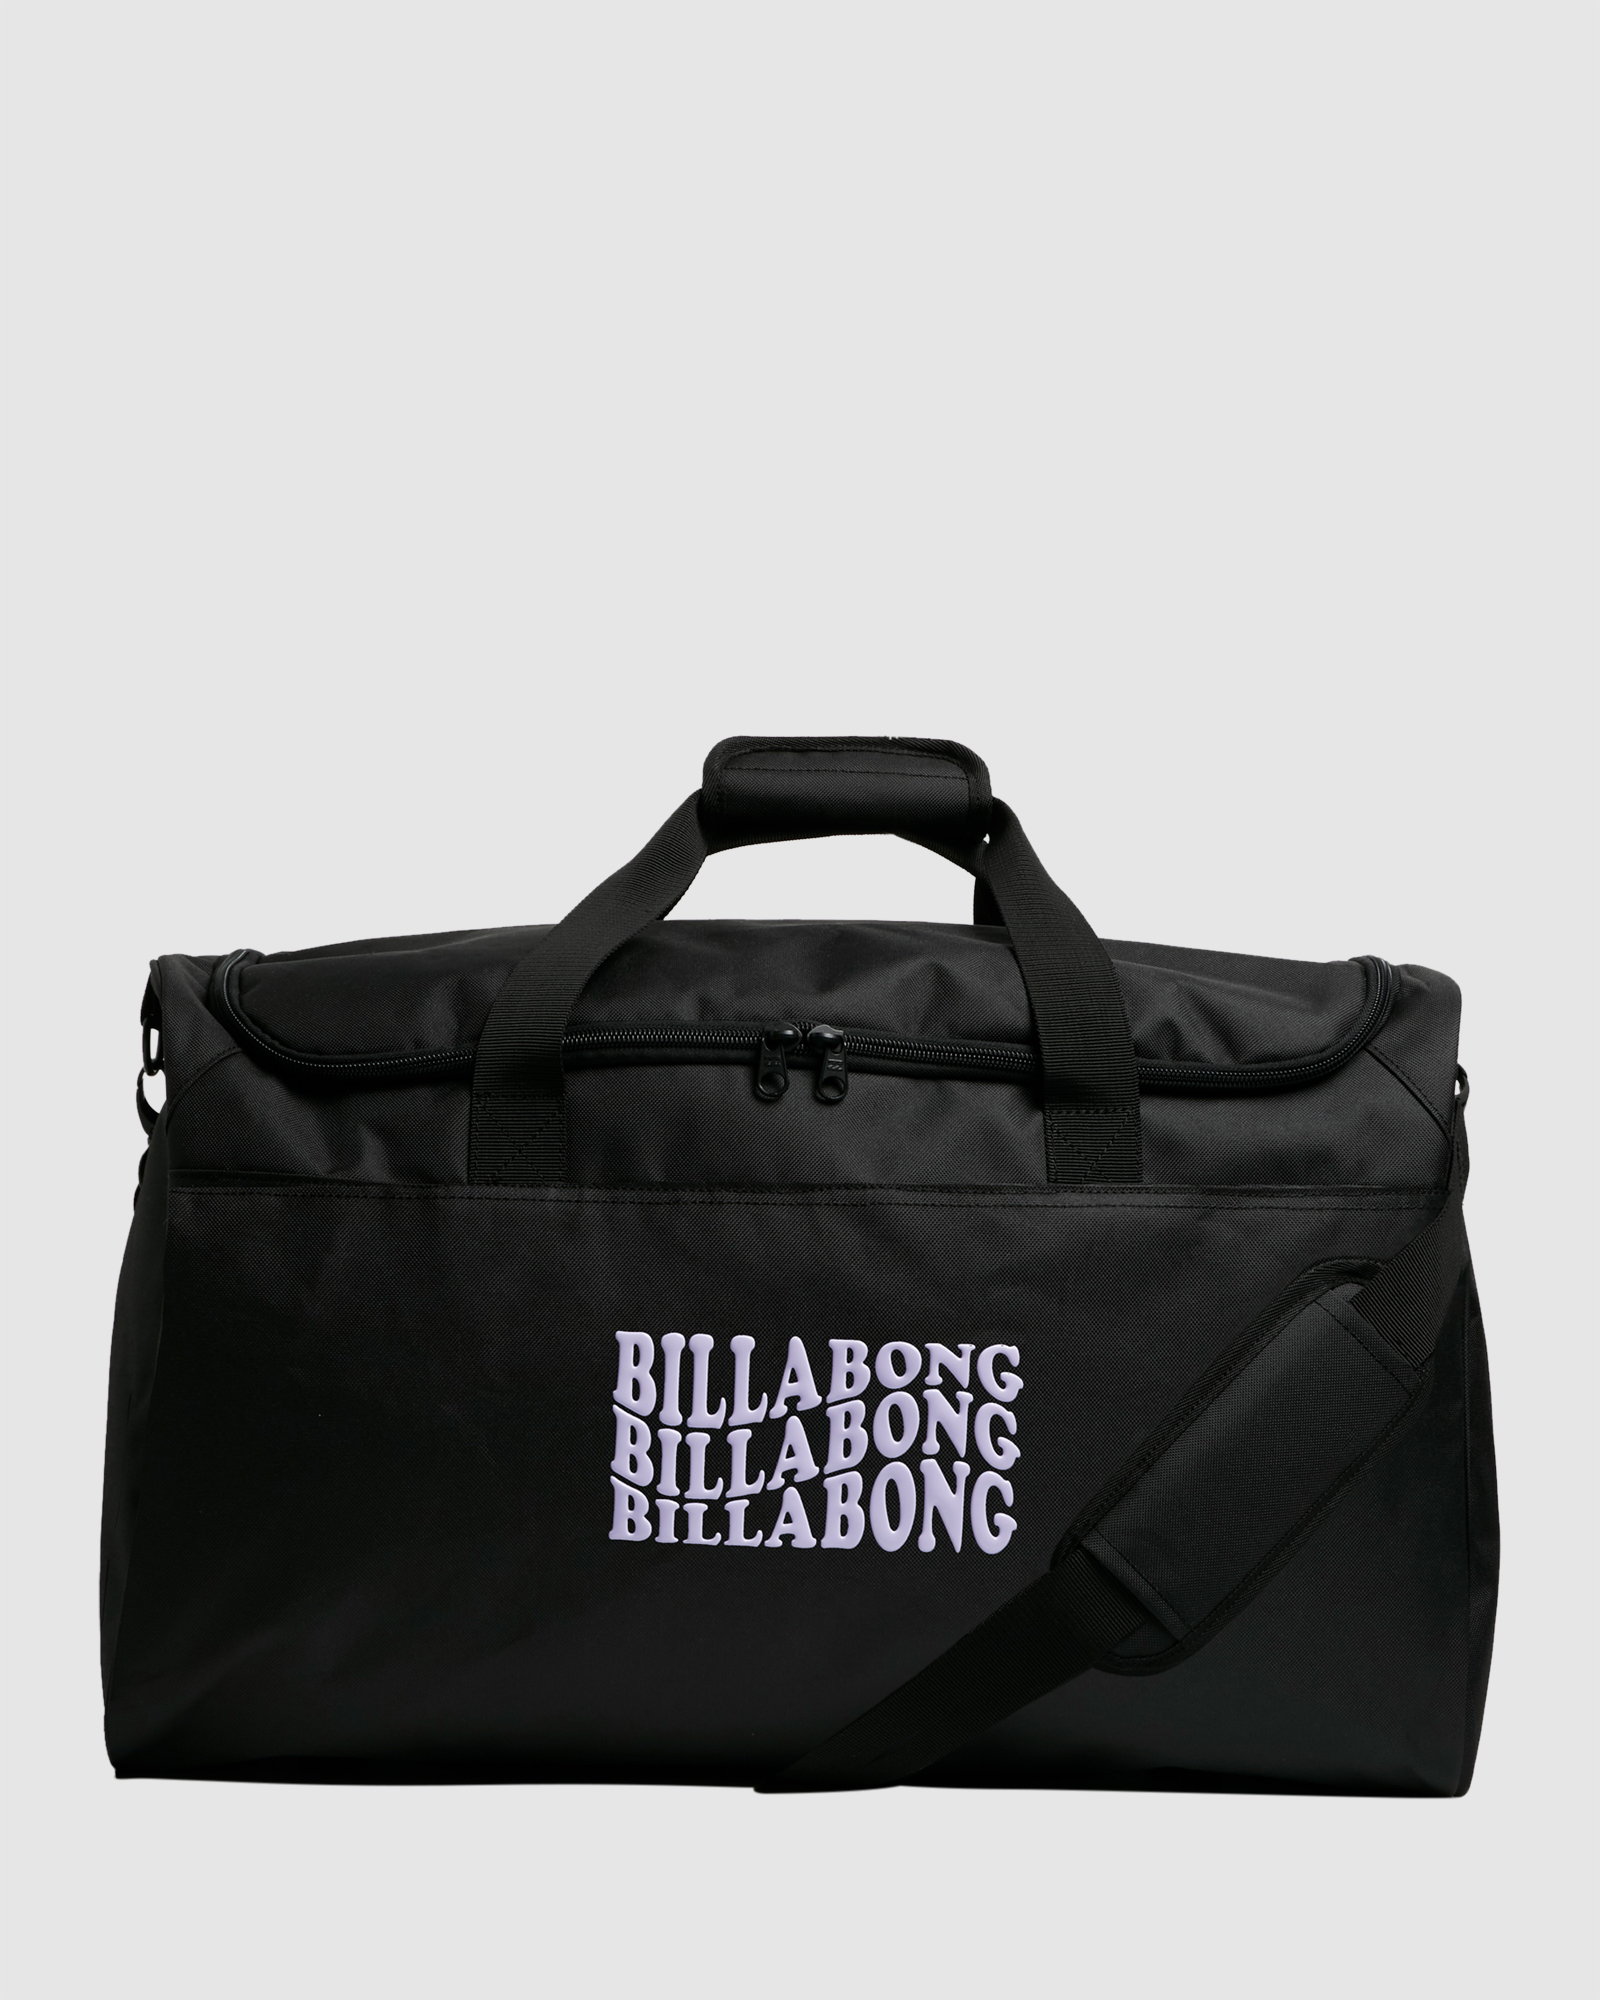 Billabong Stacked Weekender Duffle Bag - Black | SurfStitch